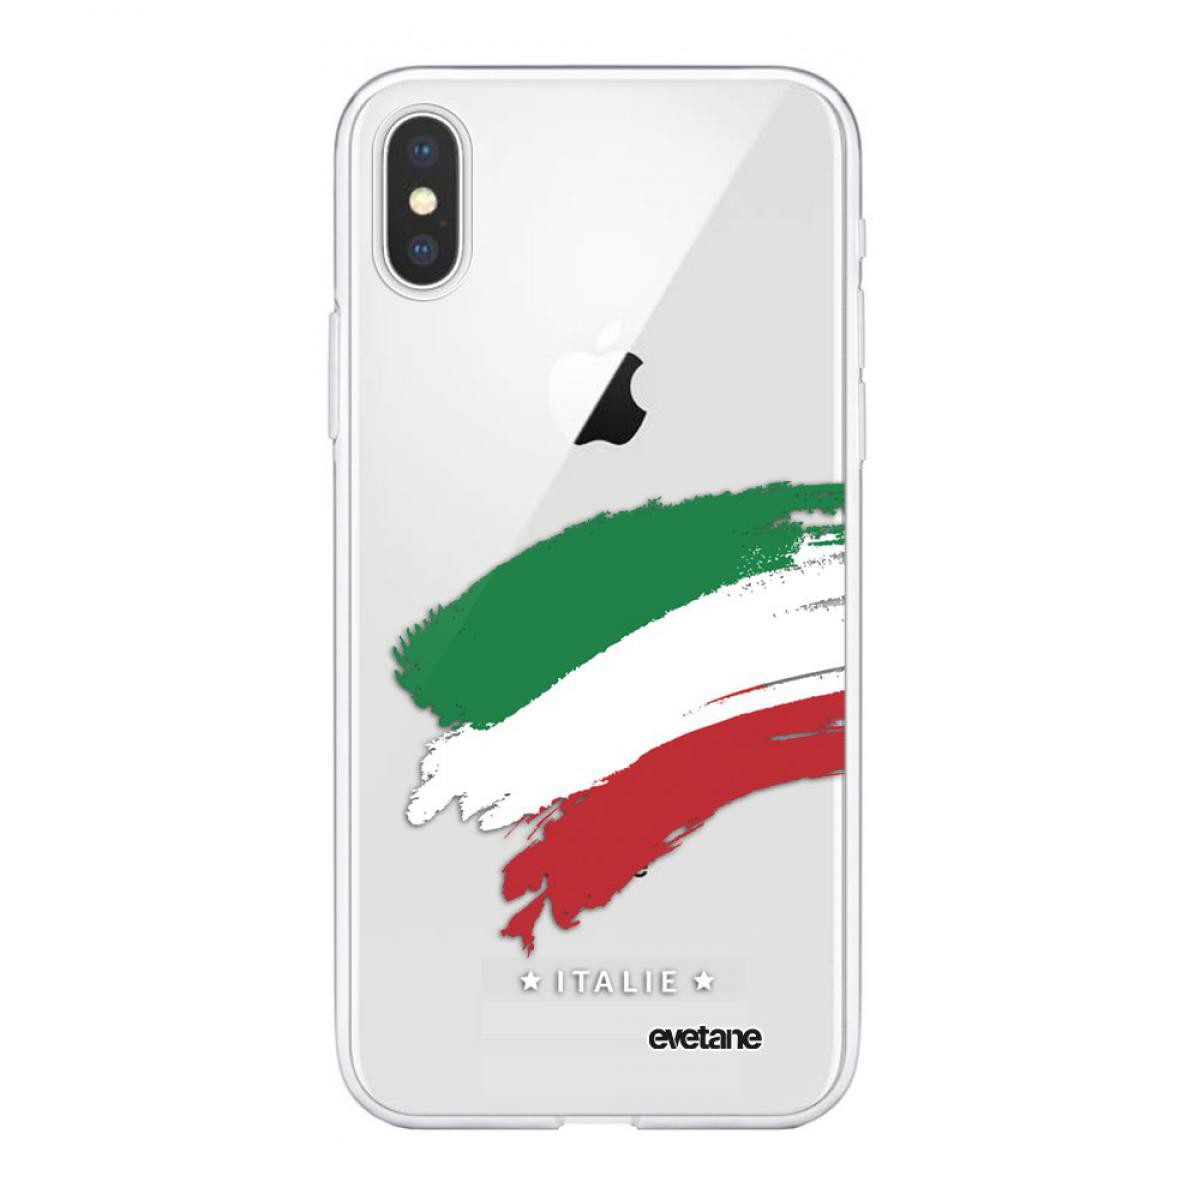 Evetane - Coque iPhone Xs Max souple transparente Italie Motif Ecriture Tendance Evetane. - Coque, étui smartphone